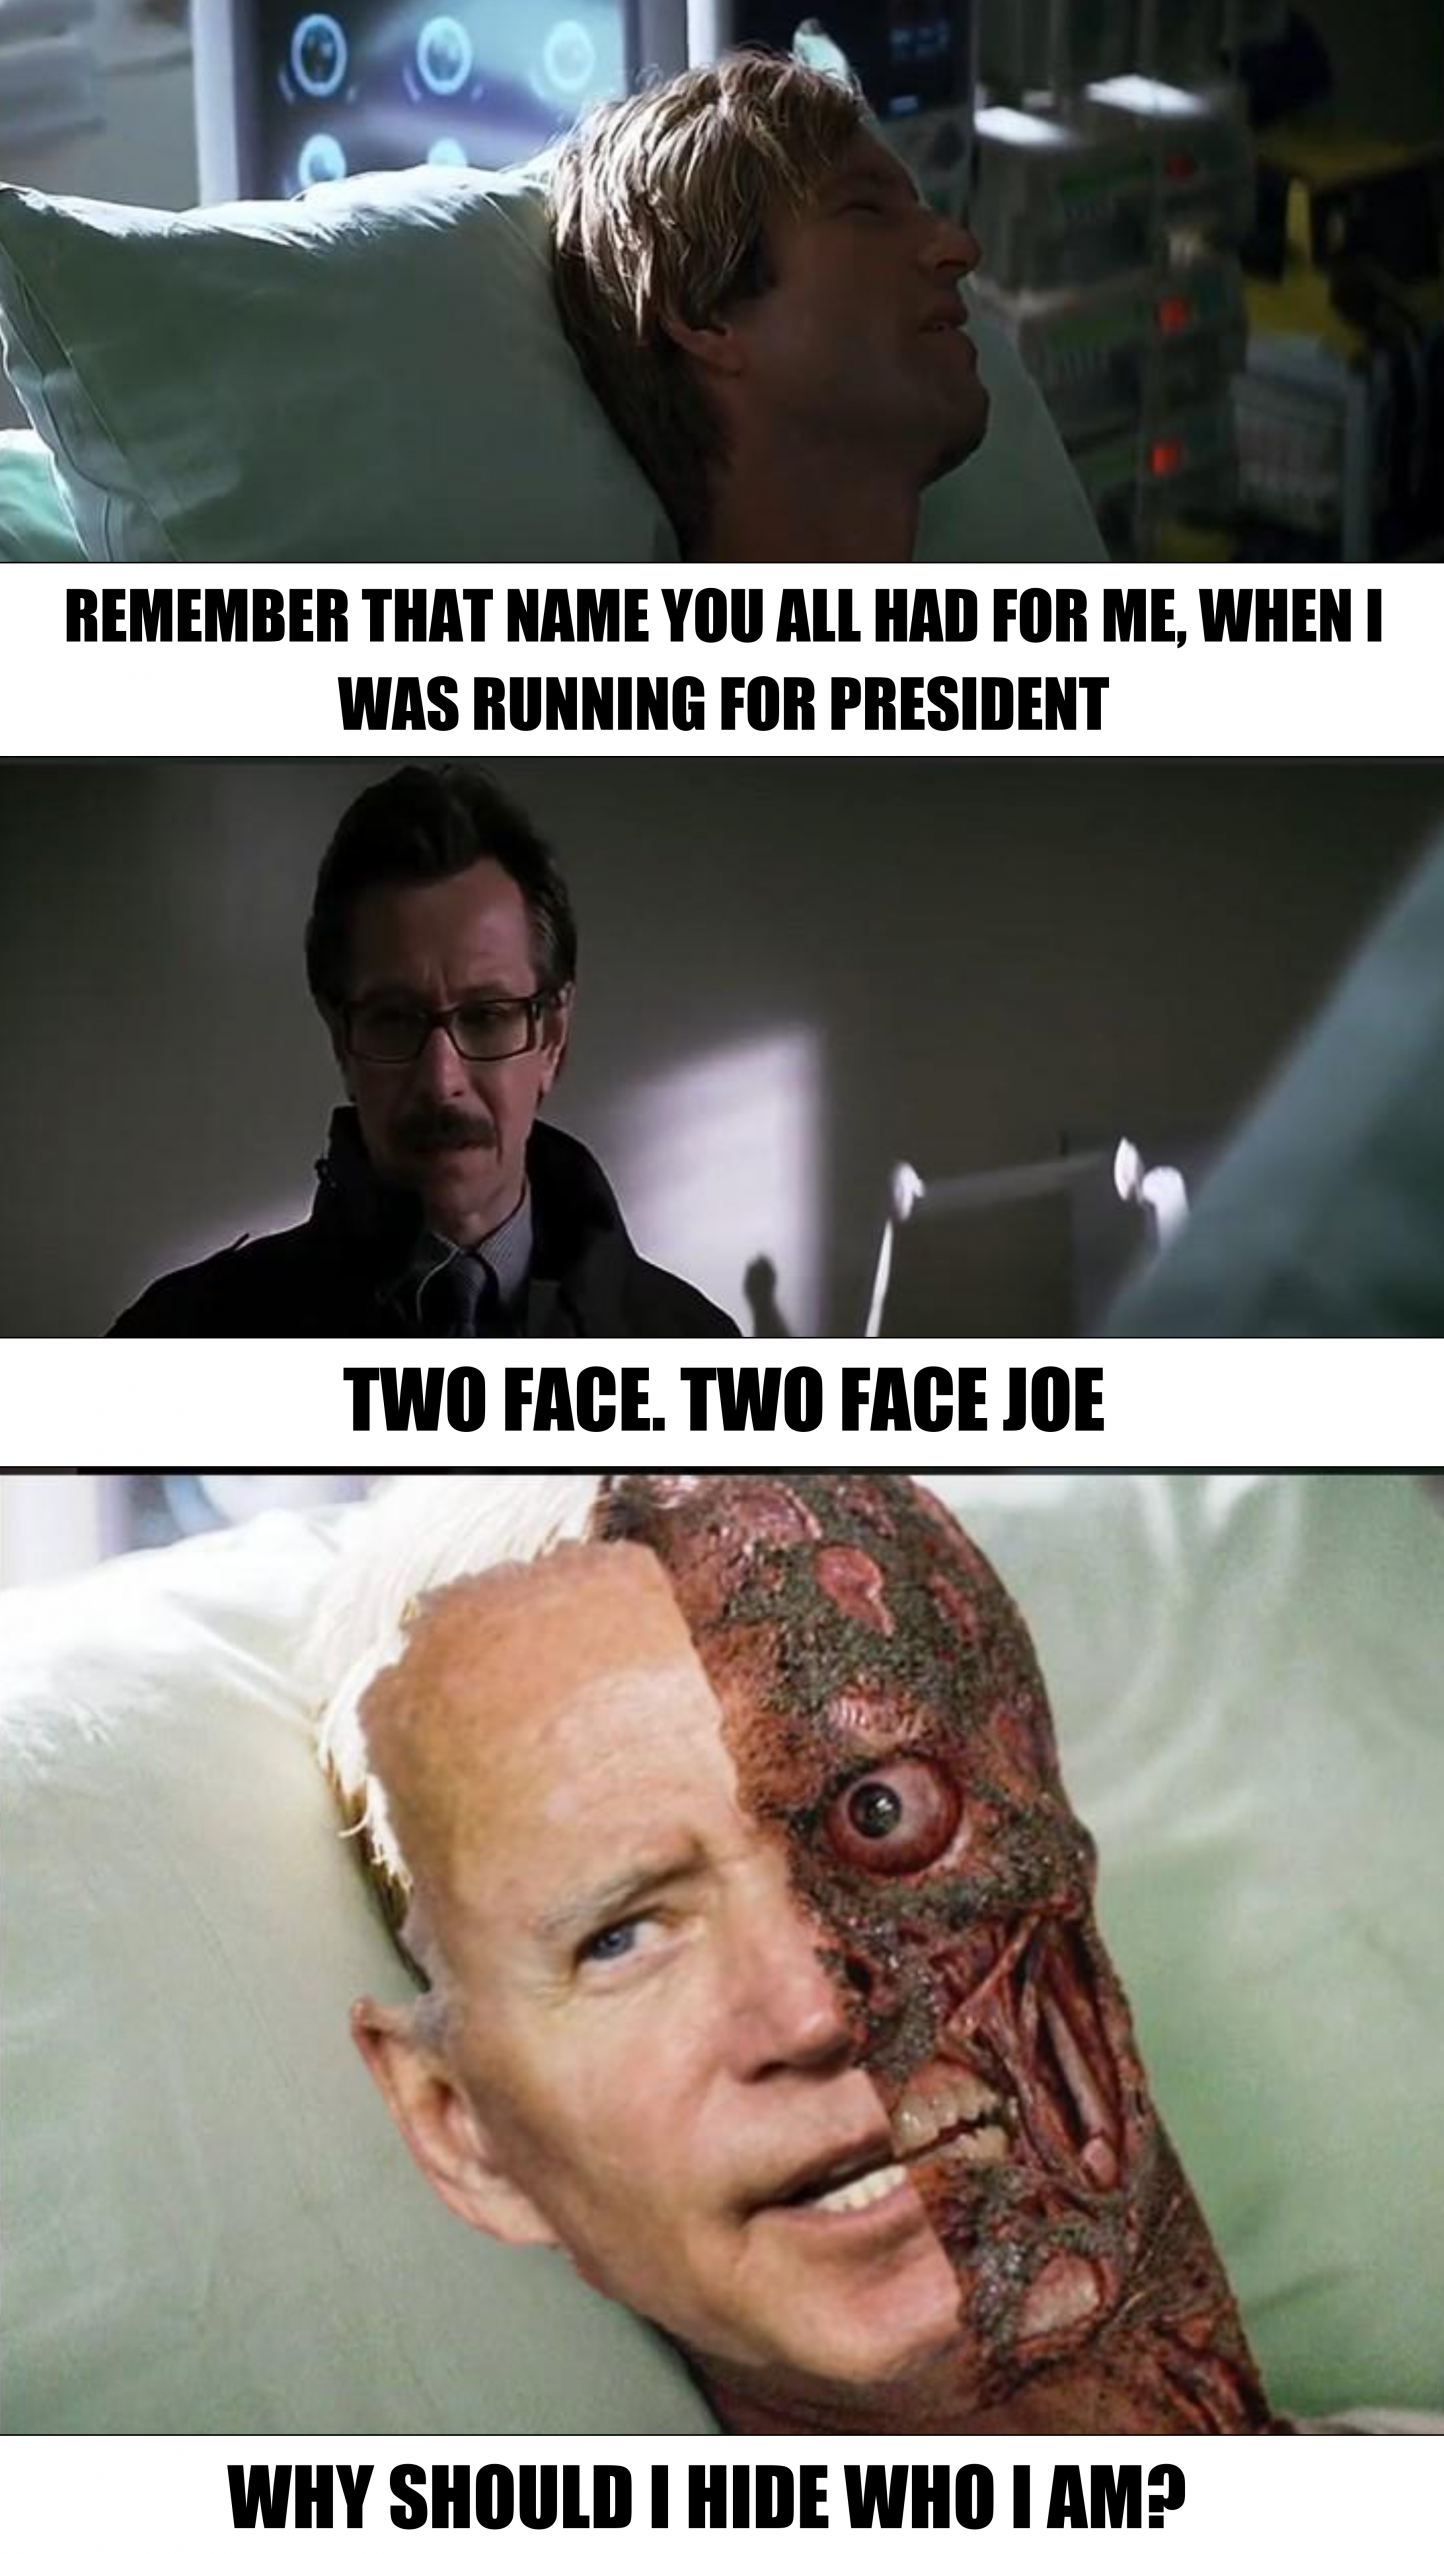 two face Meme Generator - Imgflip